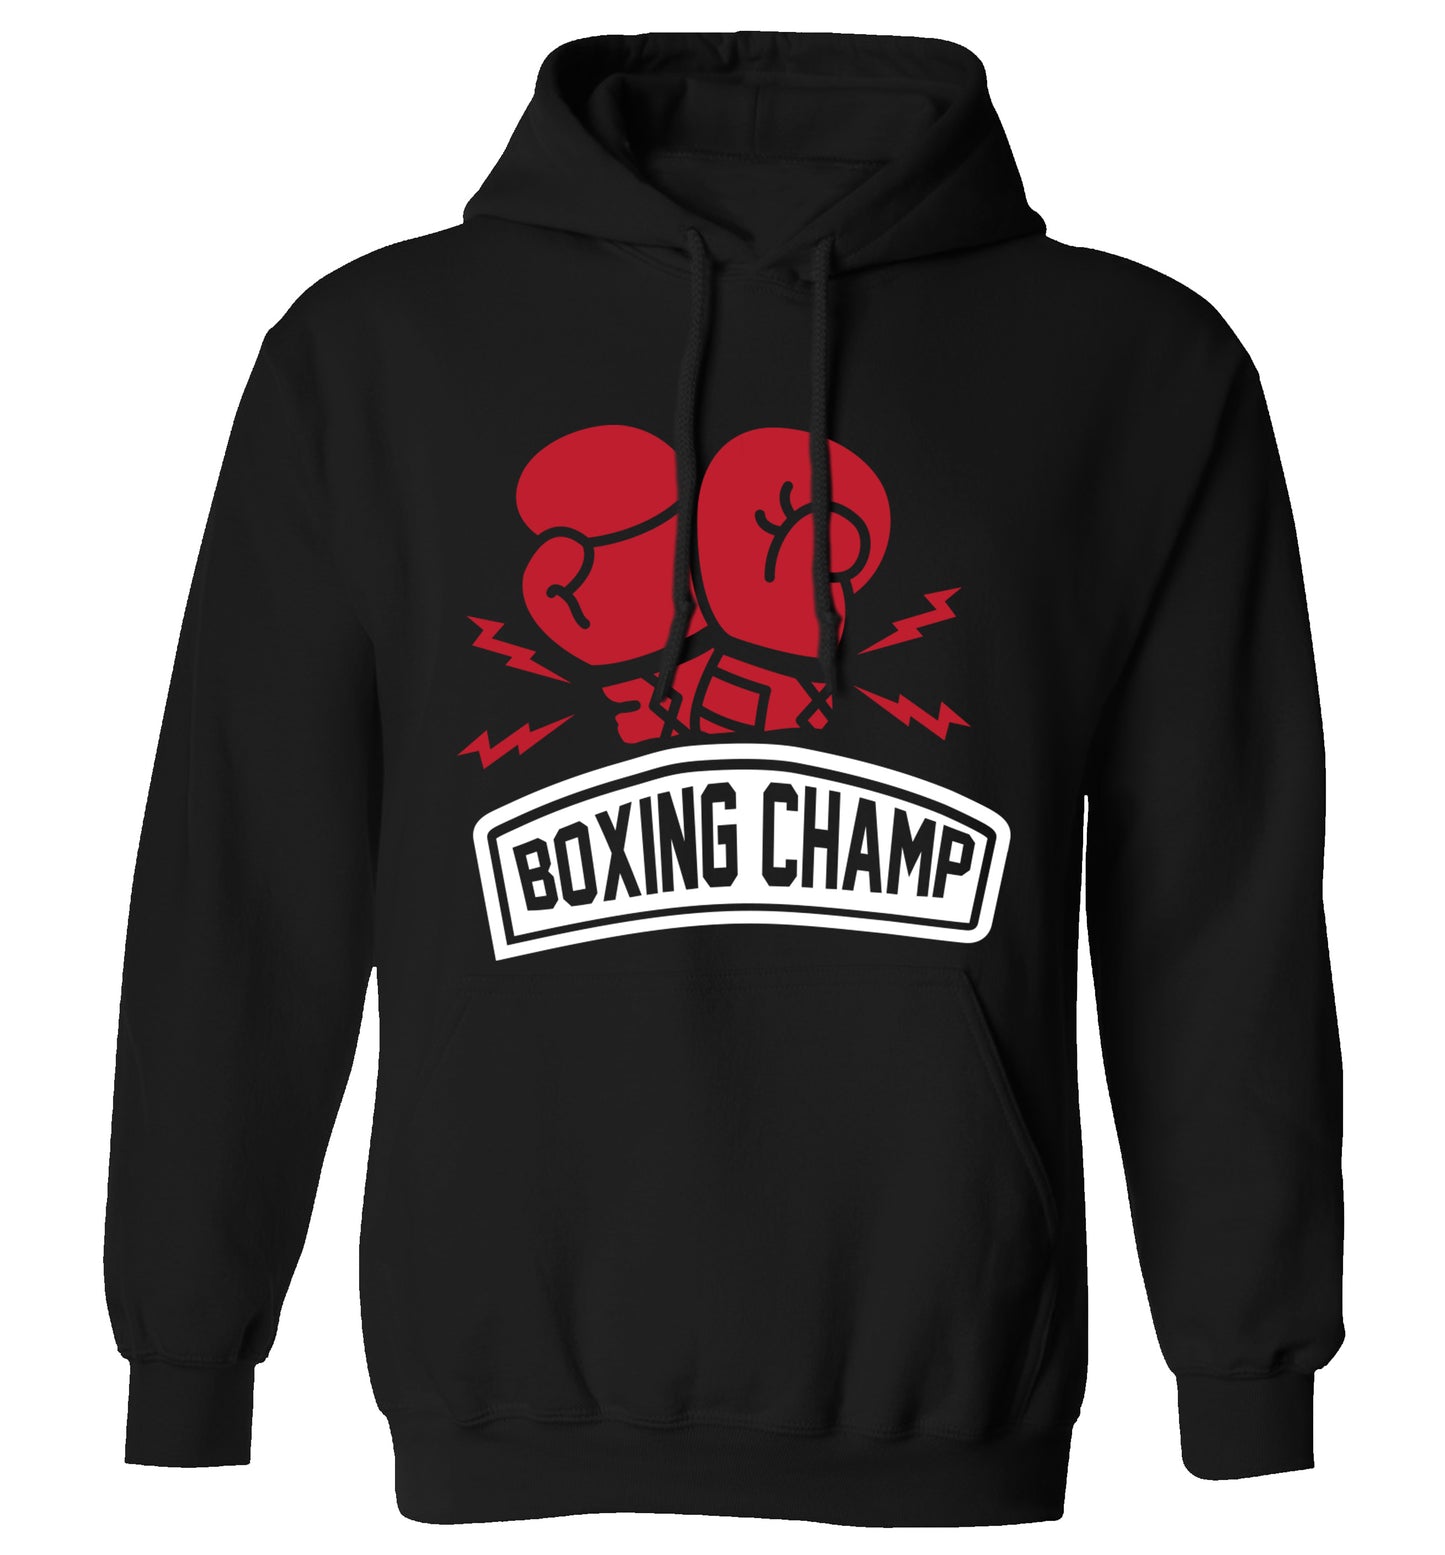 Boxing Champ adults unisex black hoodie 2XL